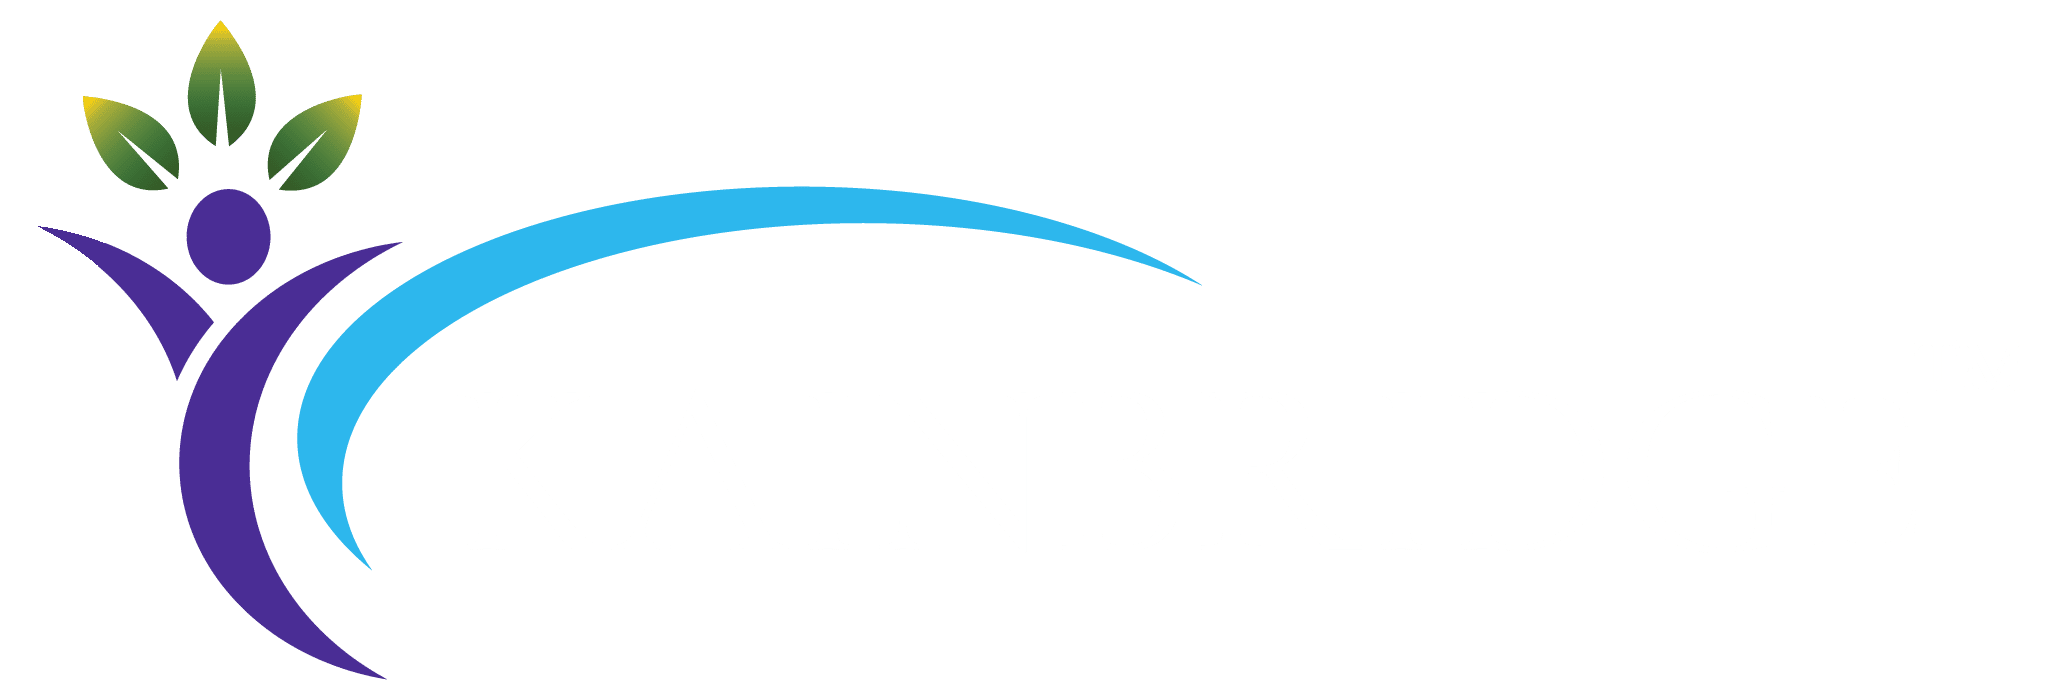 B2B Research Kainbridge™ Kainbridge logo for dark backgrounds